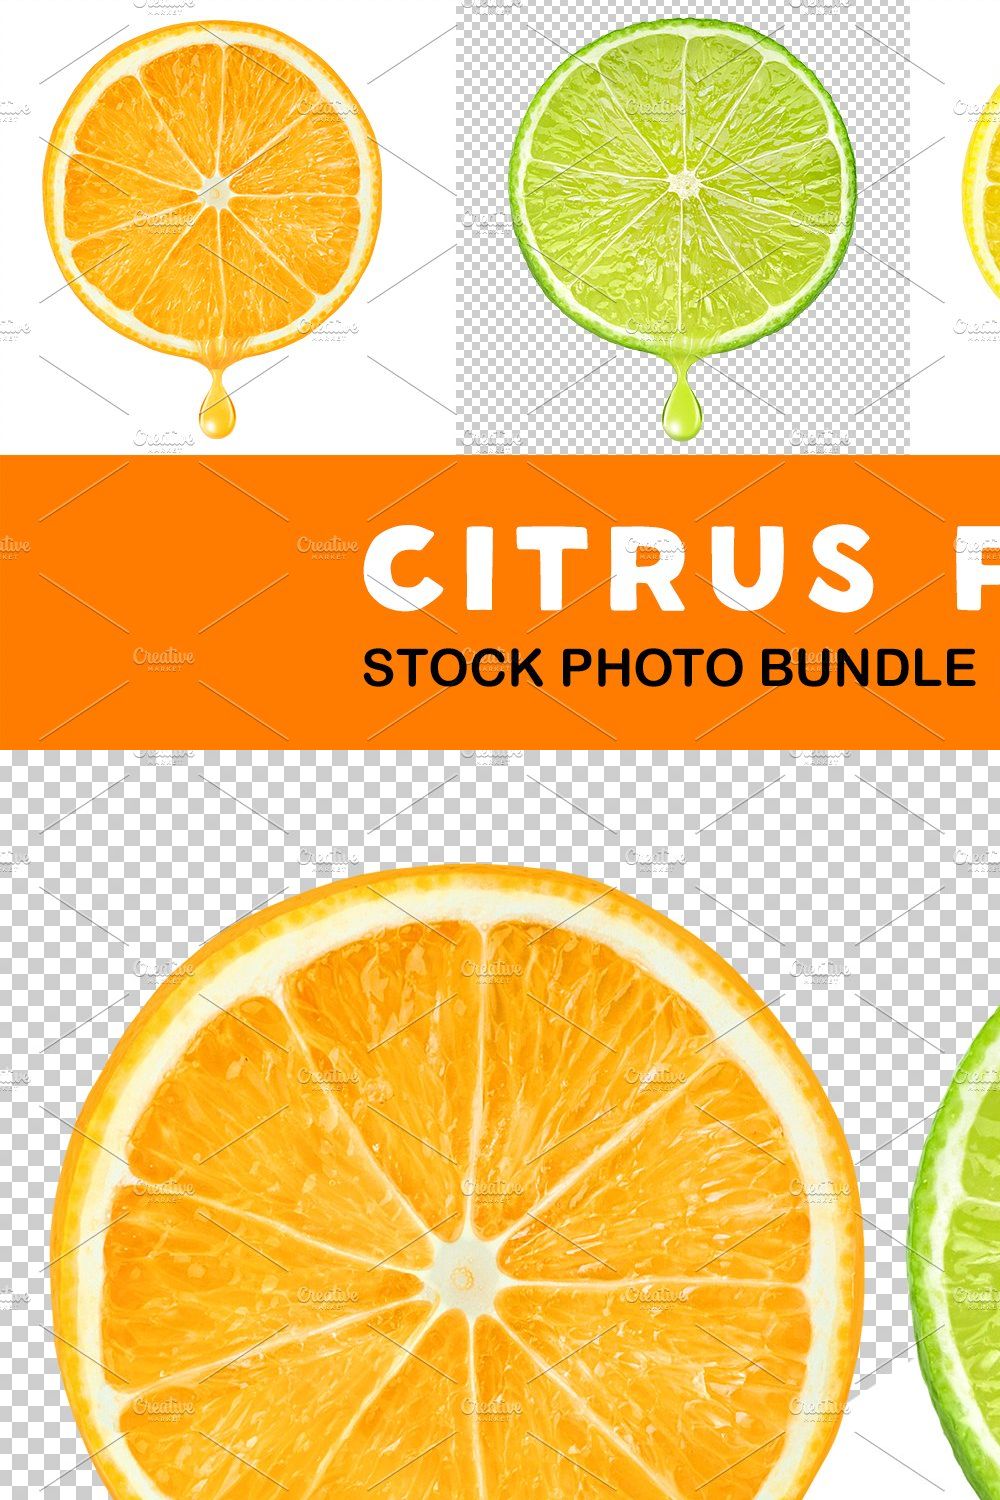 Citrus slices with juice drop pinterest preview image.